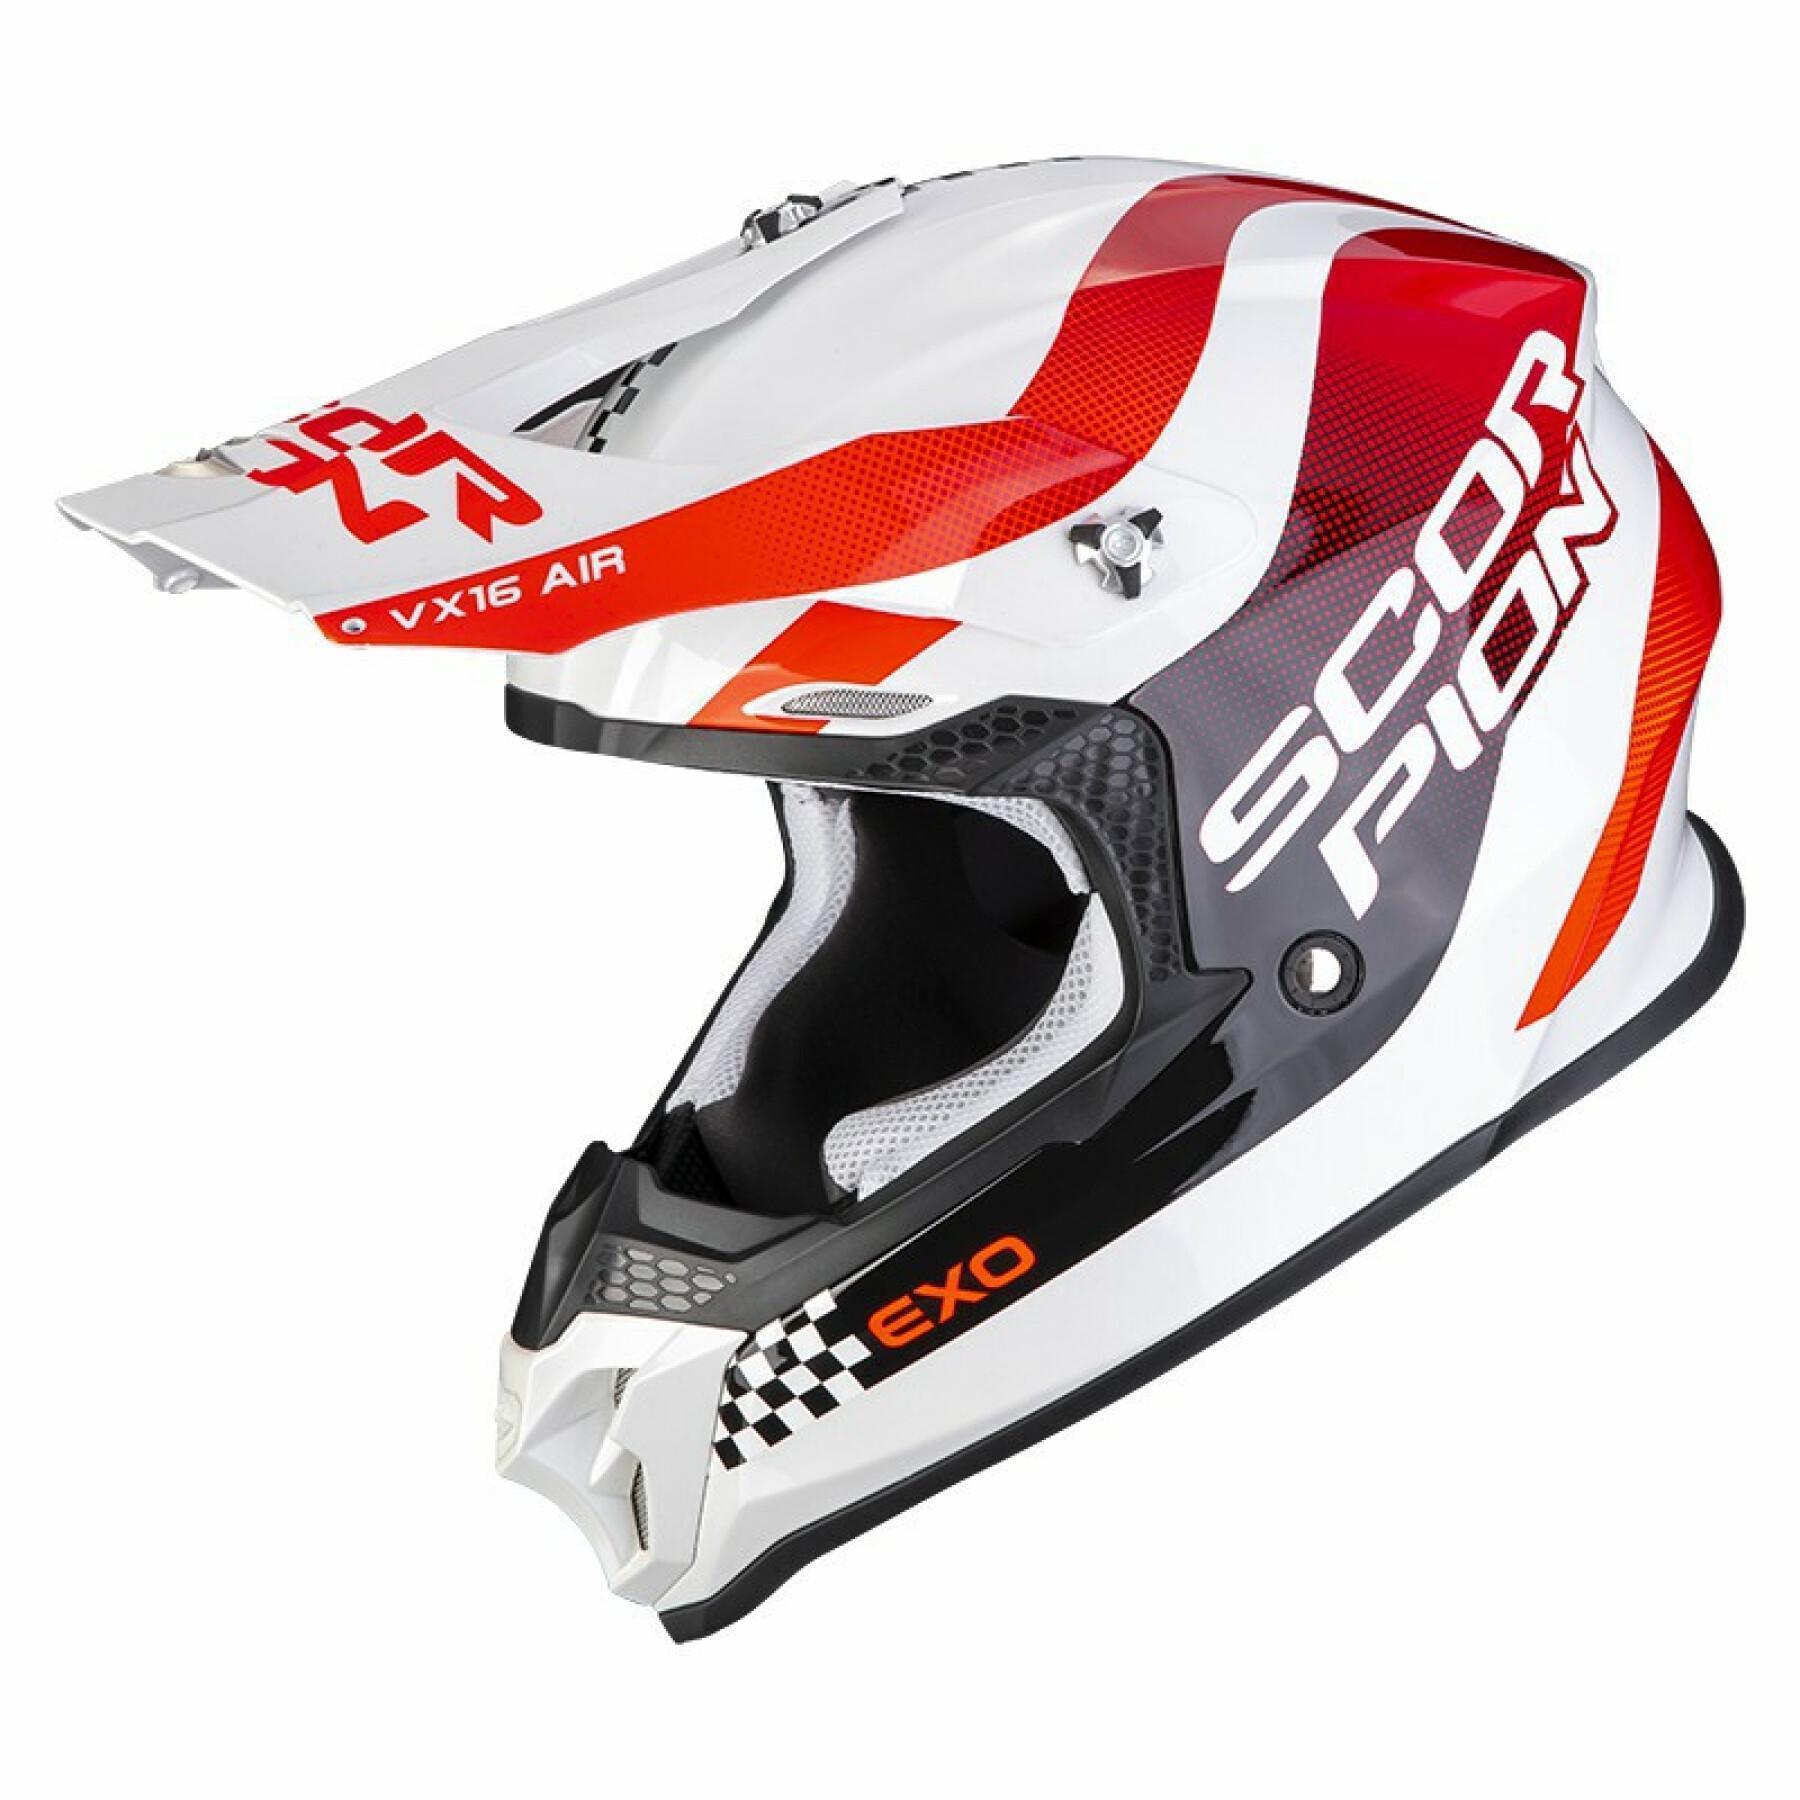 Visera de casco de moto Scorpion vx-16 PEAK SOUL